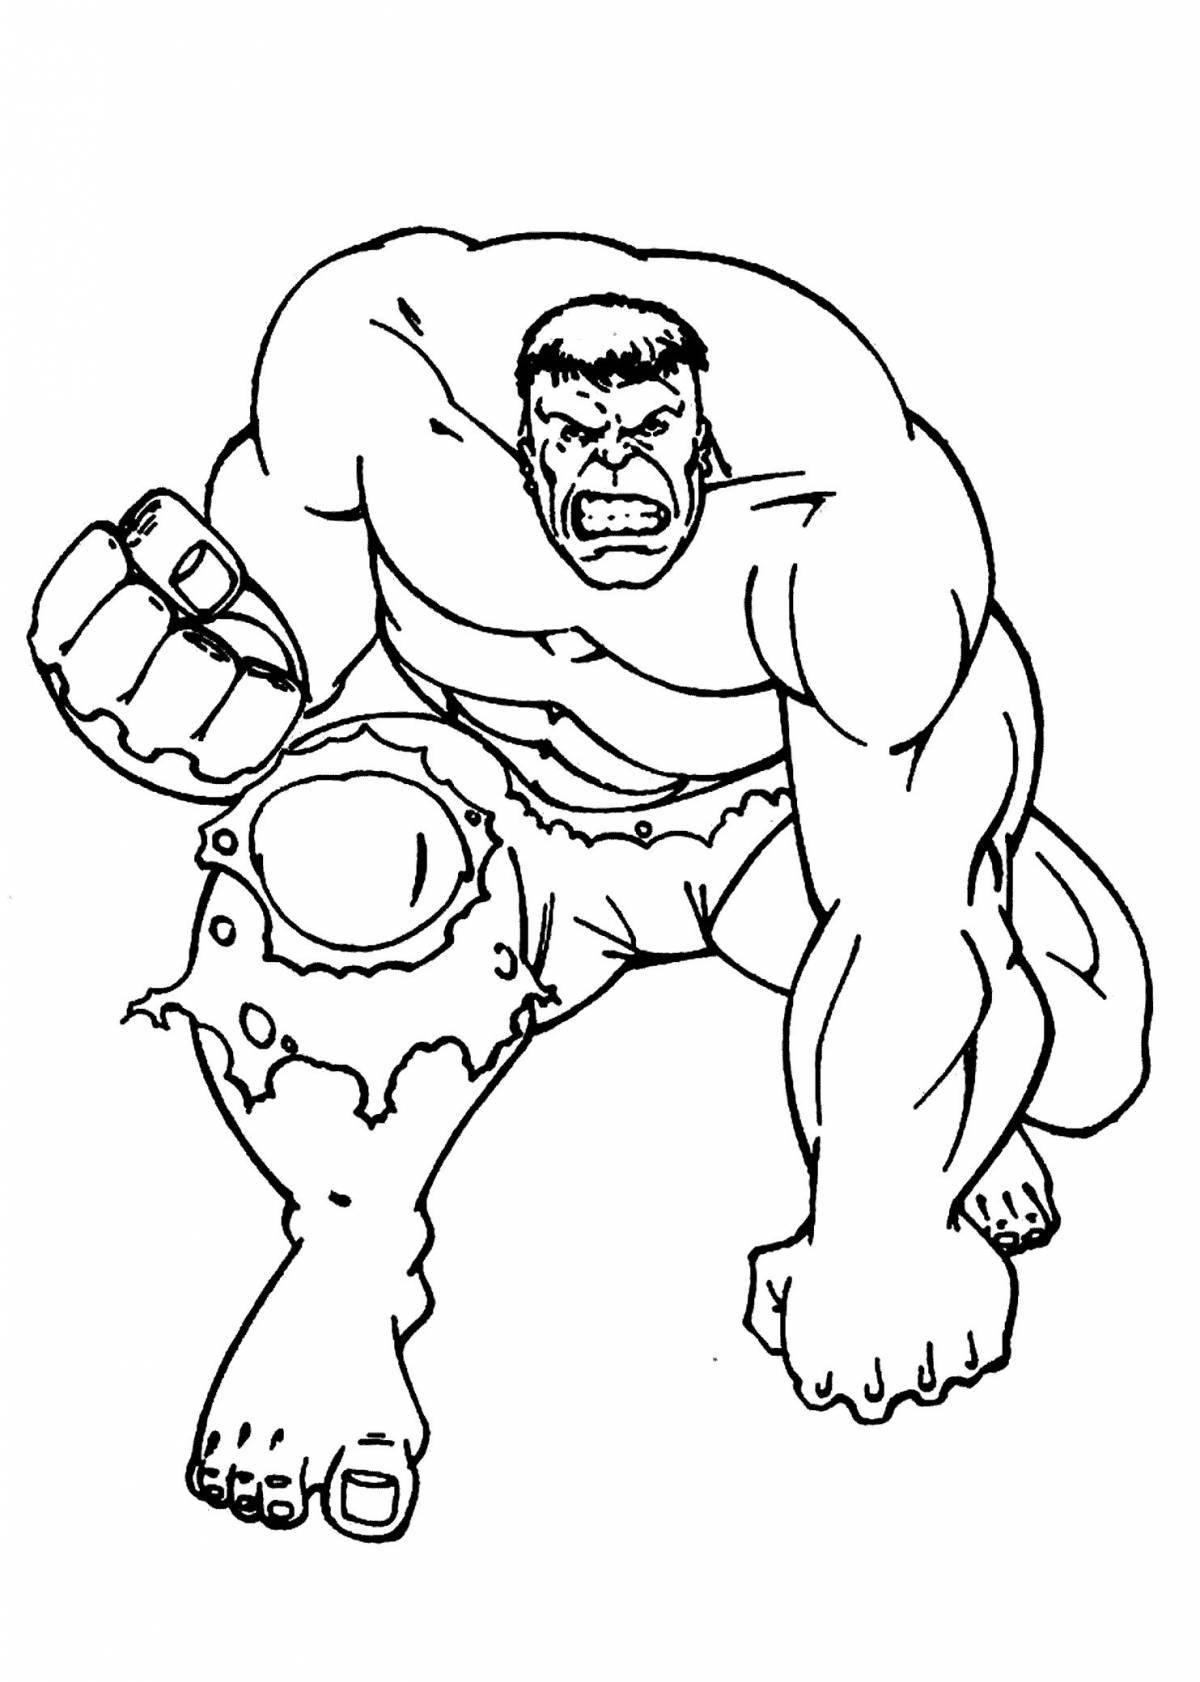 Outstanding hulk man coloring